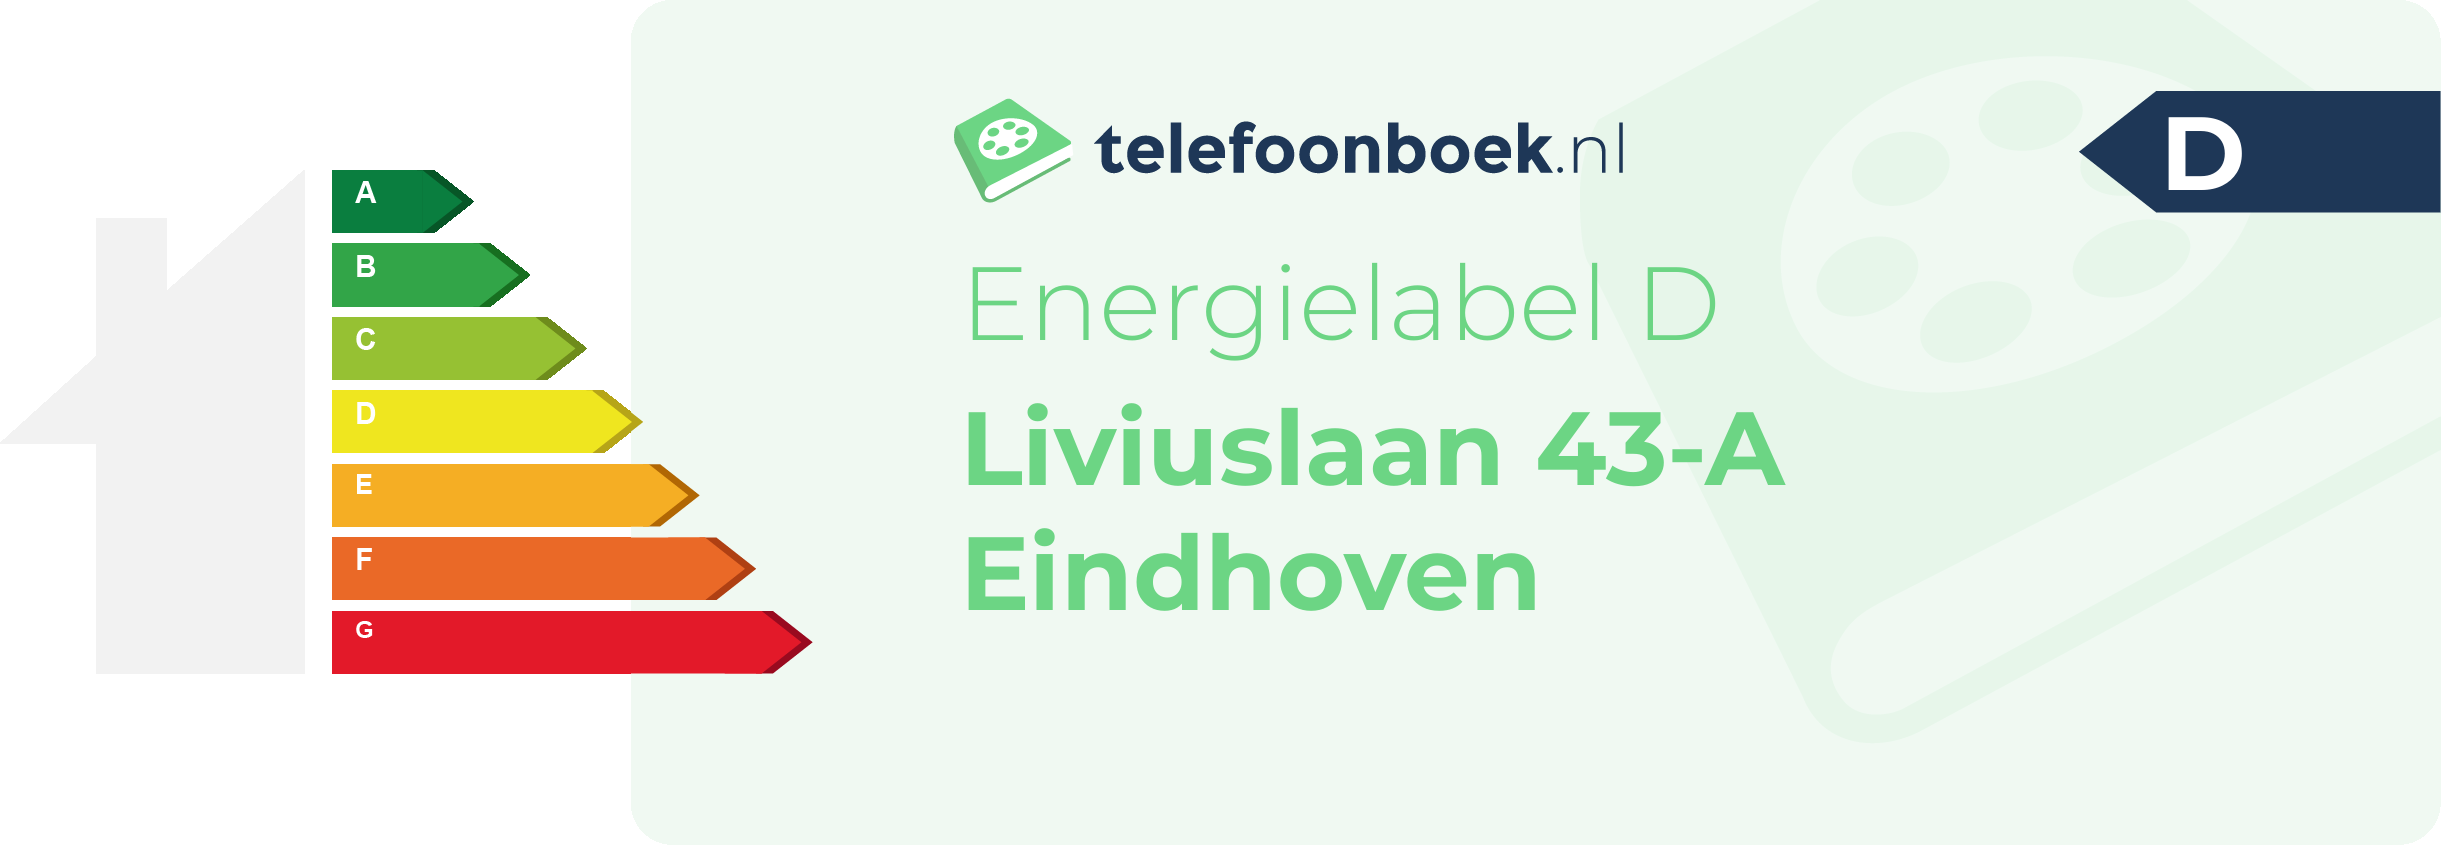 Energielabel Liviuslaan 43-A Eindhoven